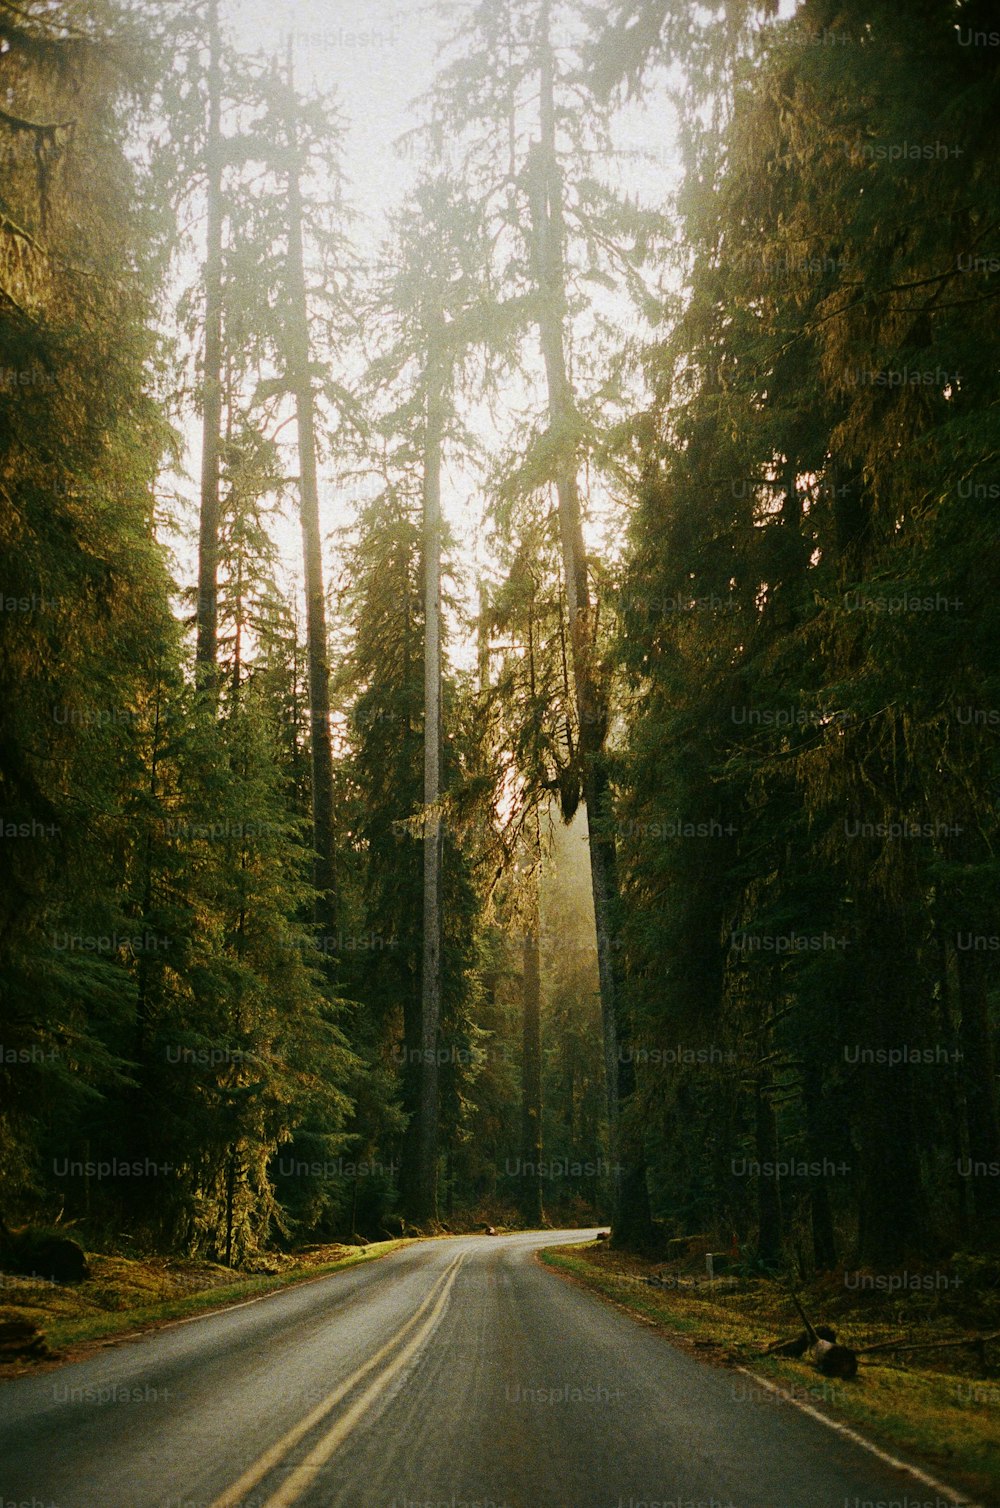 Un camino en medio de un bosque con árboles altos